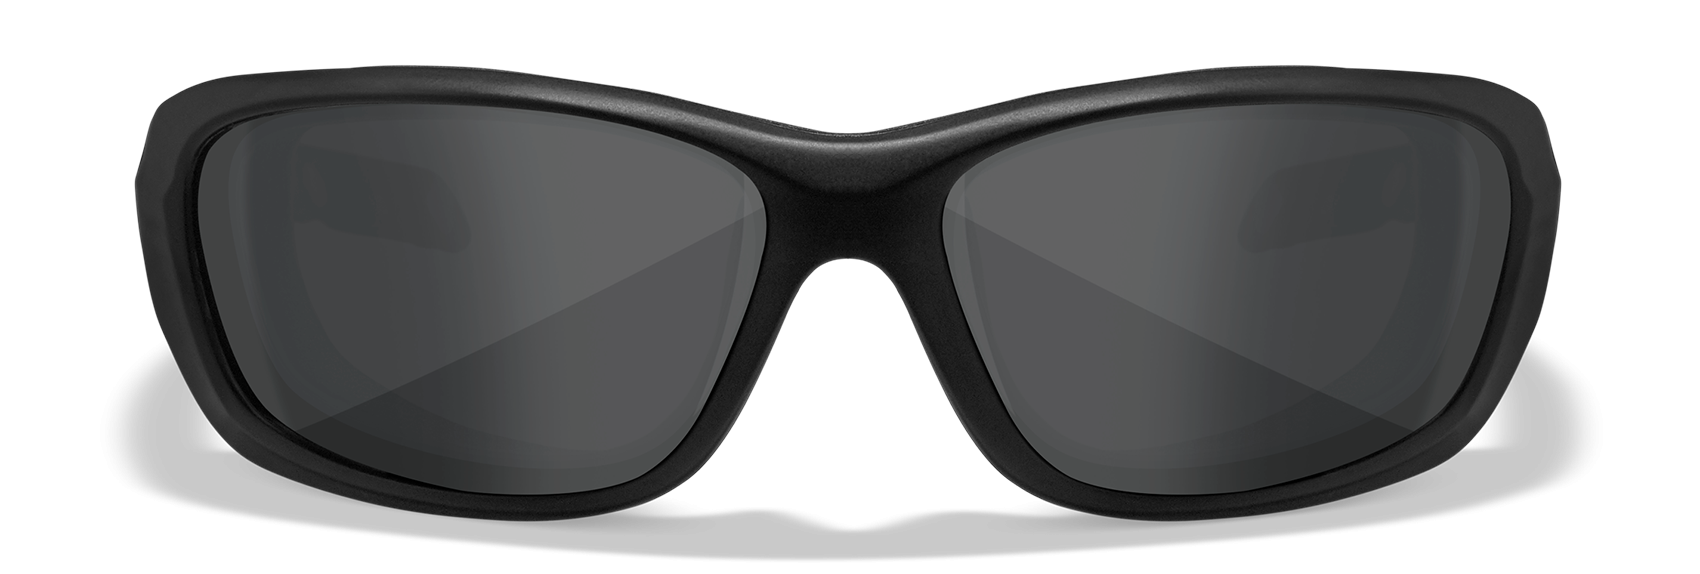 Wiley X WX Gravity Black Polycarbonate Sunglasses